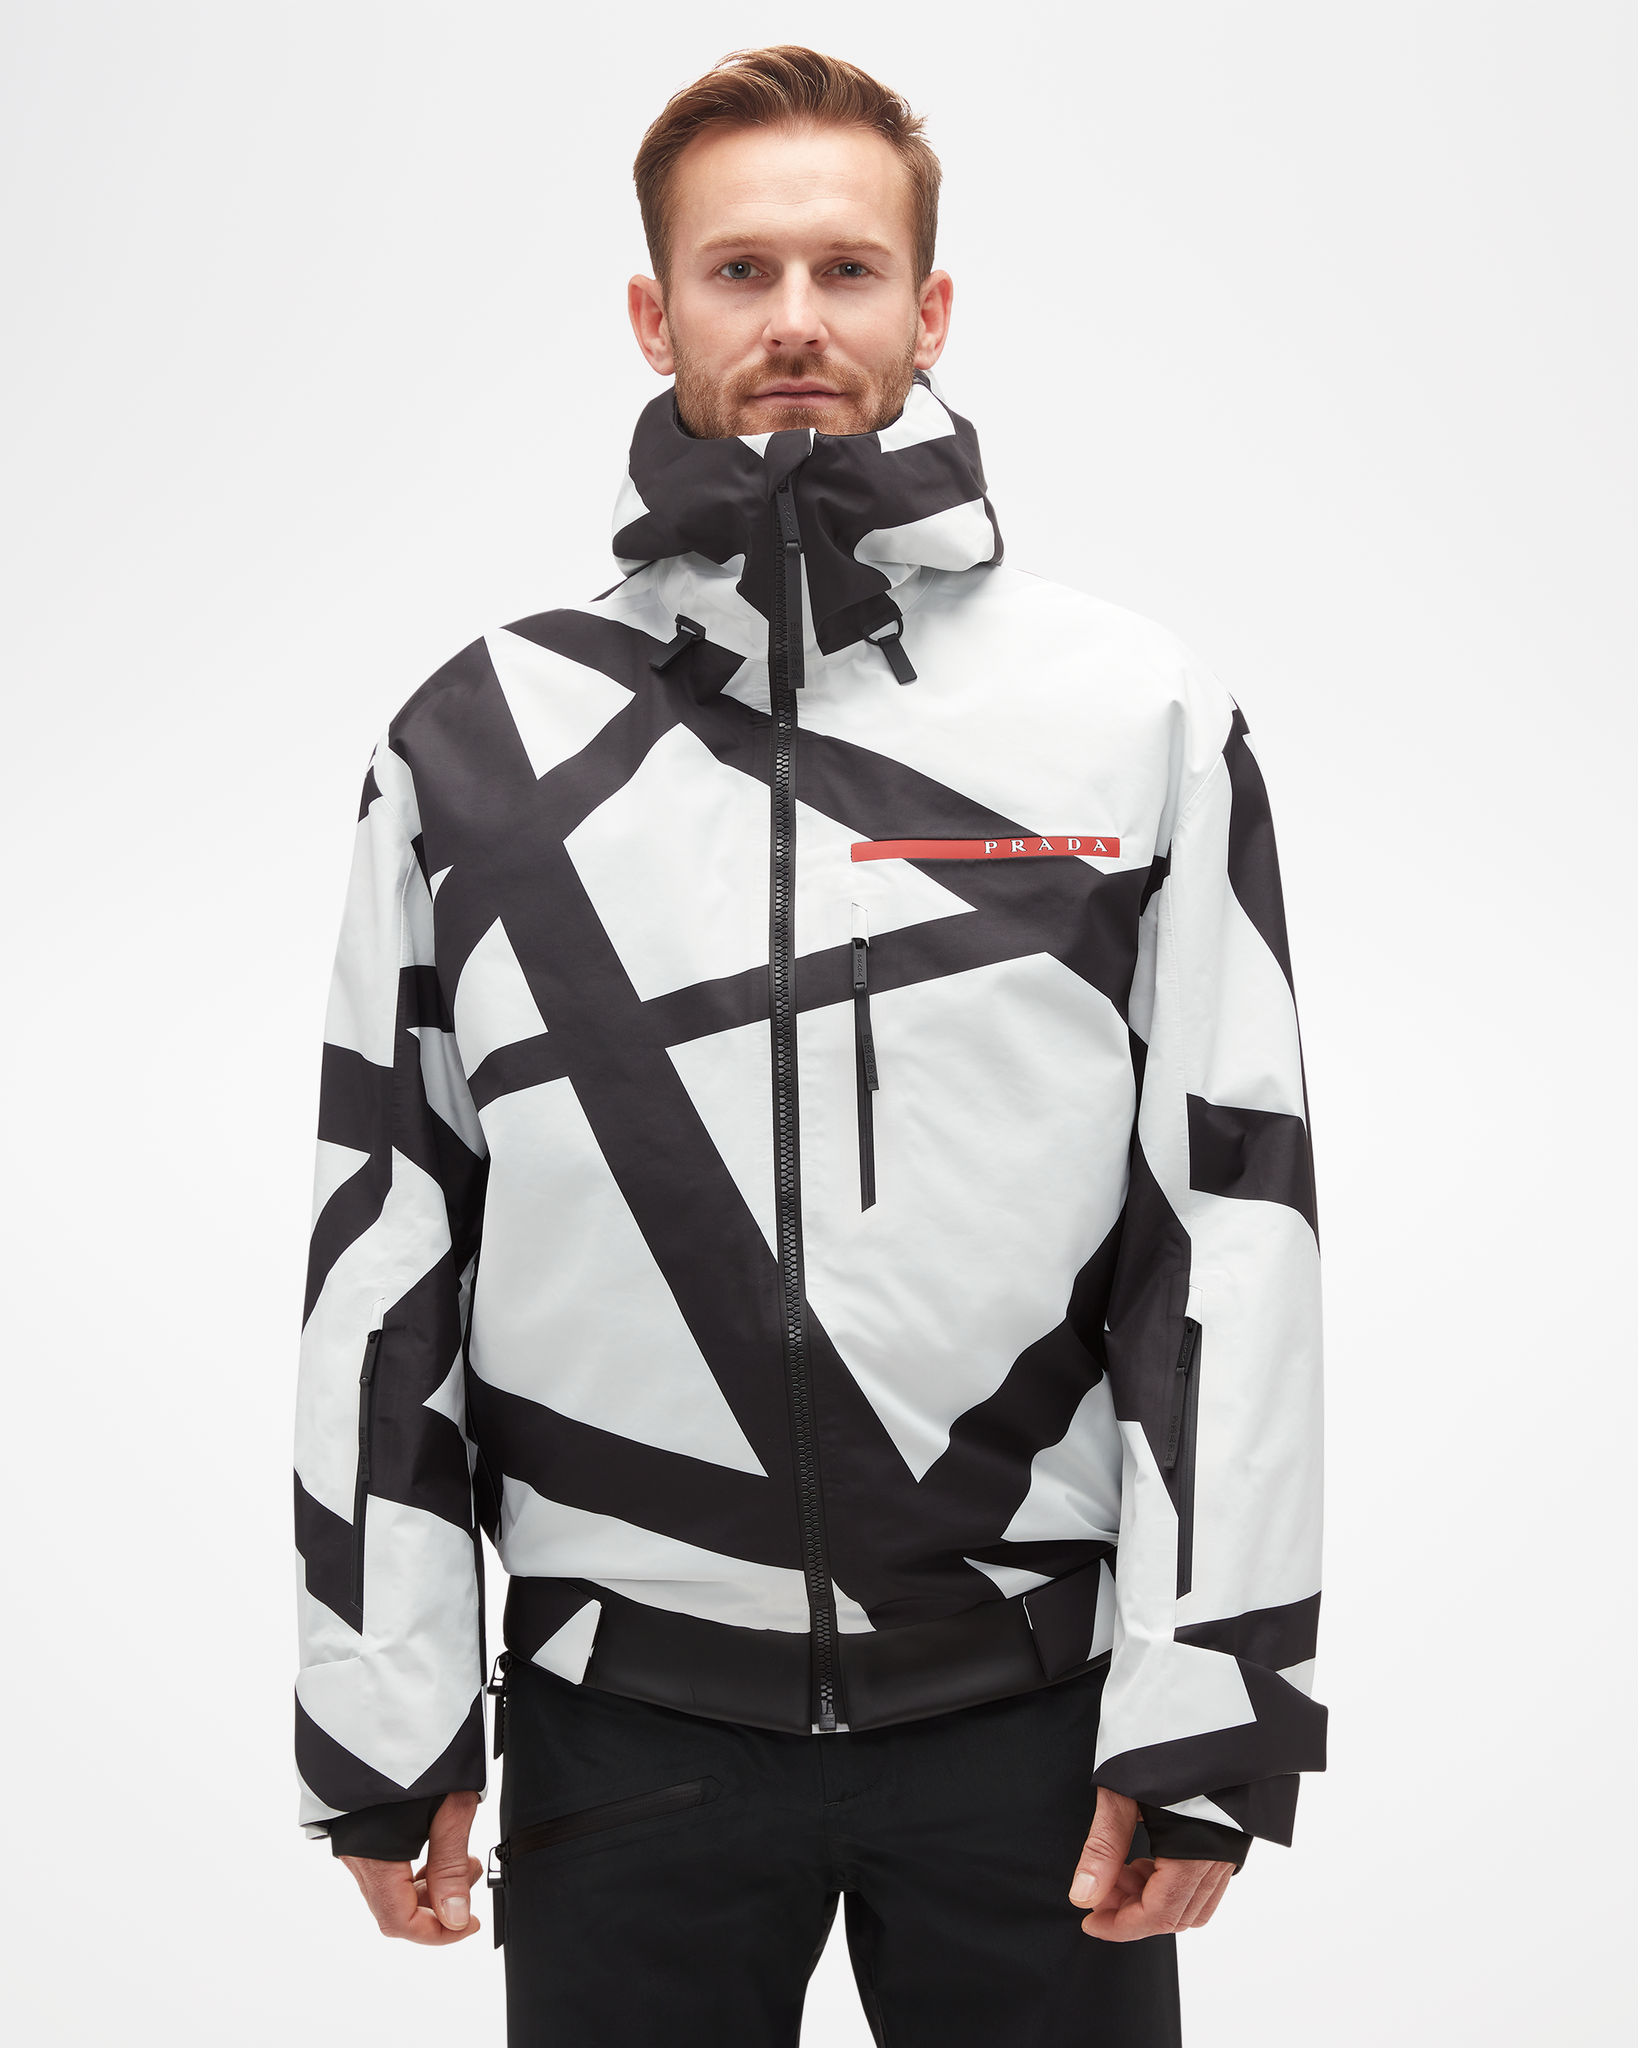 ASPENX Prada Men's Extreme Graphic | ASPENX Premium Ski Apparel